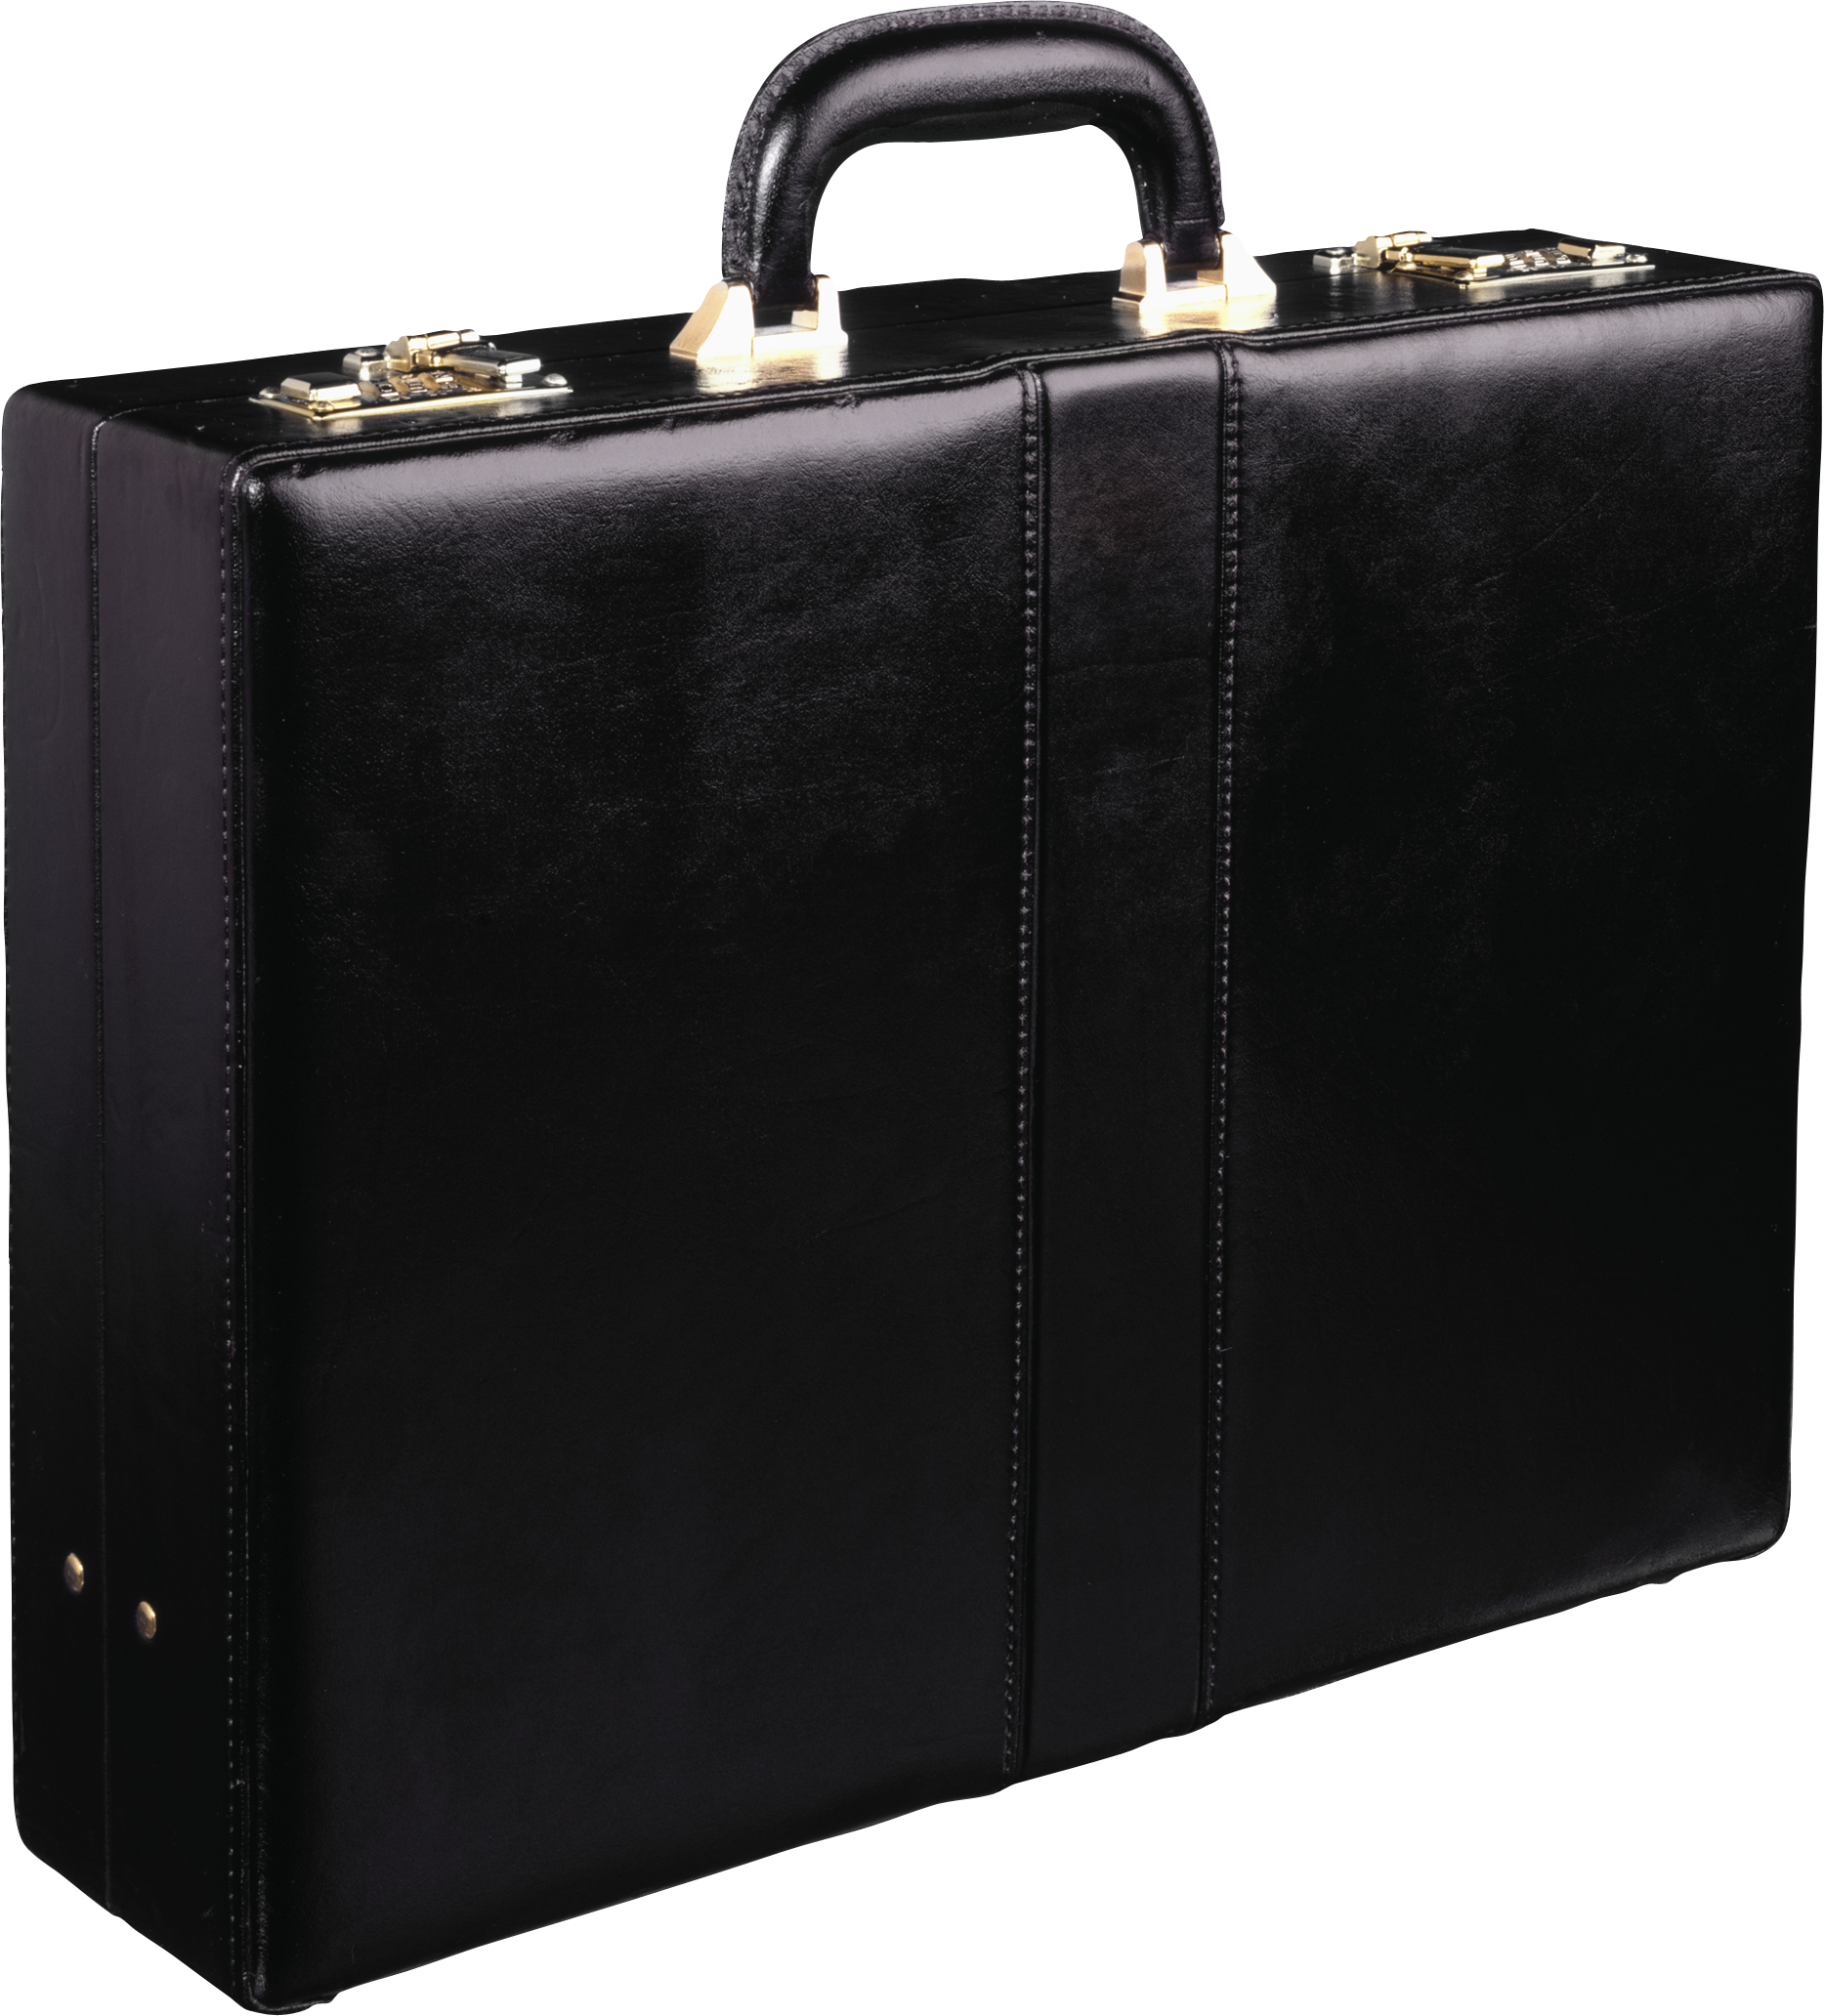 Black Suitcase PNG Image - PurePNG | Free transparent CC0 PNG Image Library